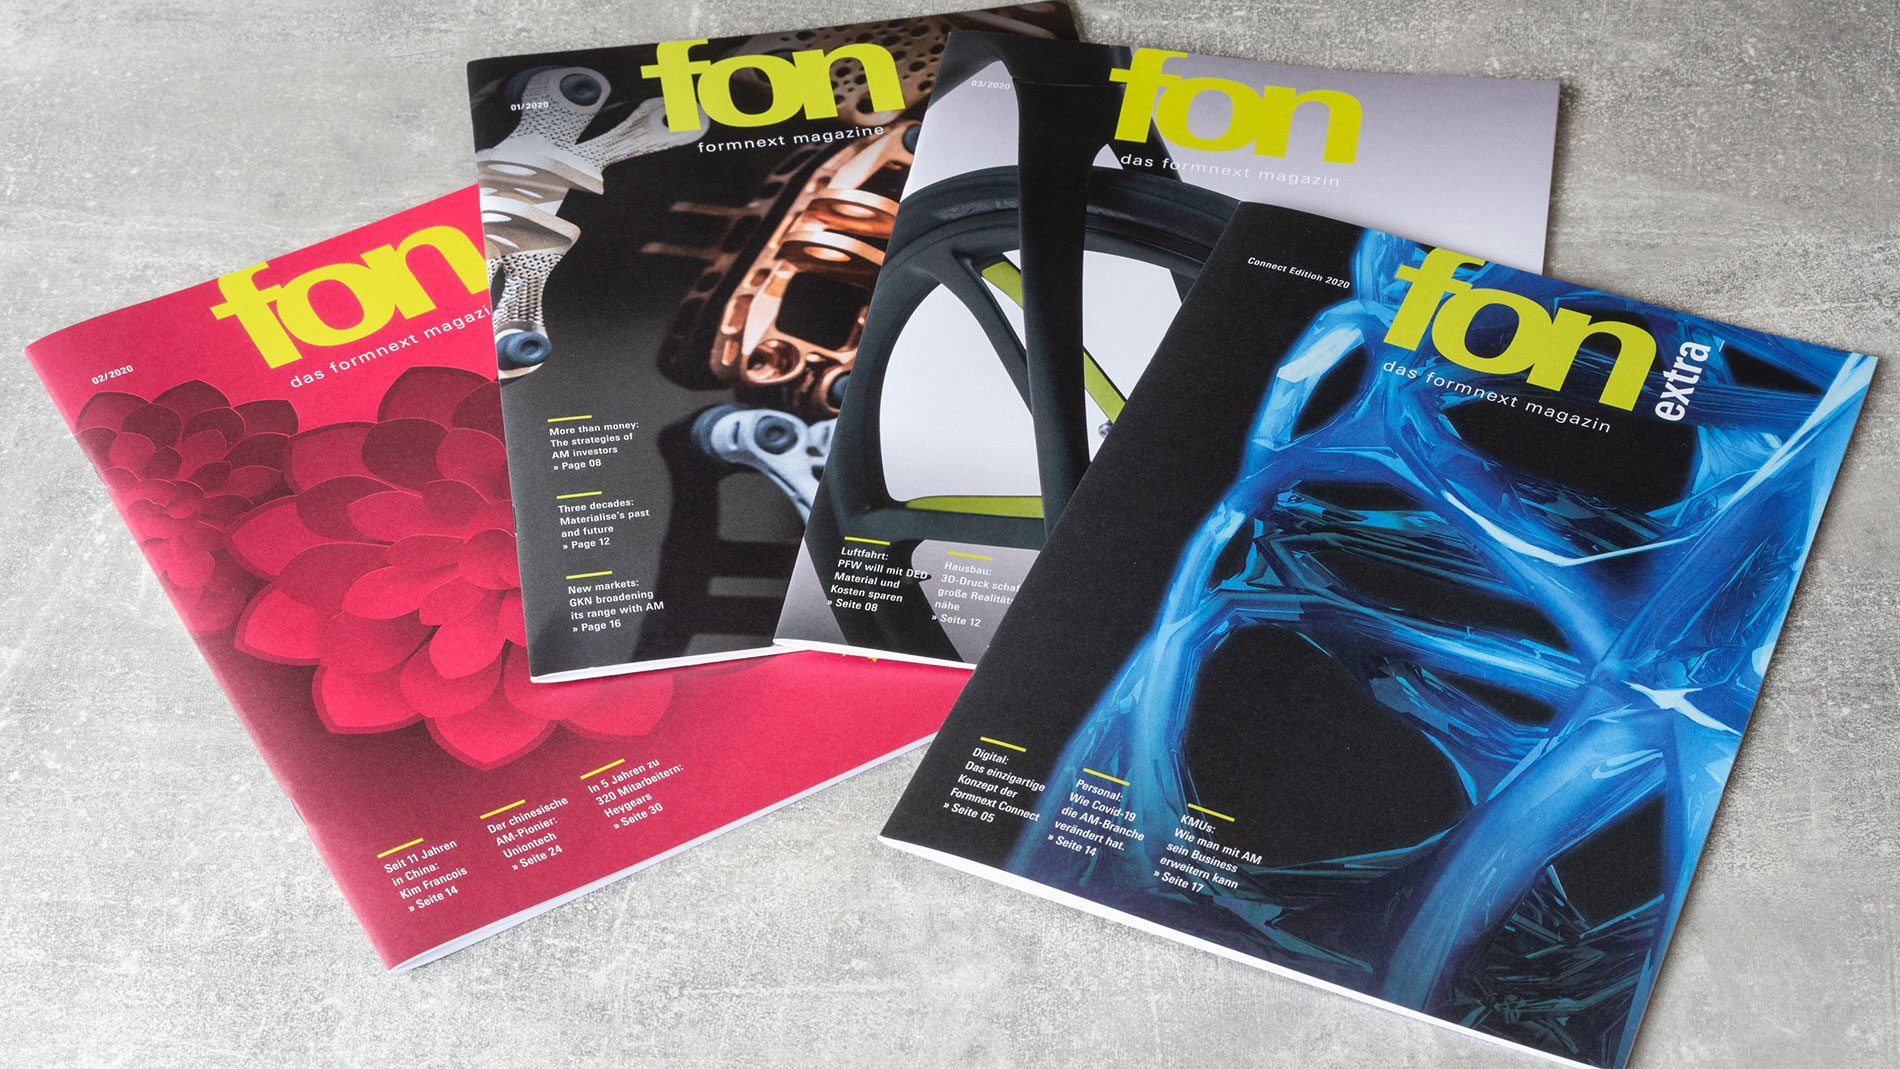 FON – the Formnext Magazine